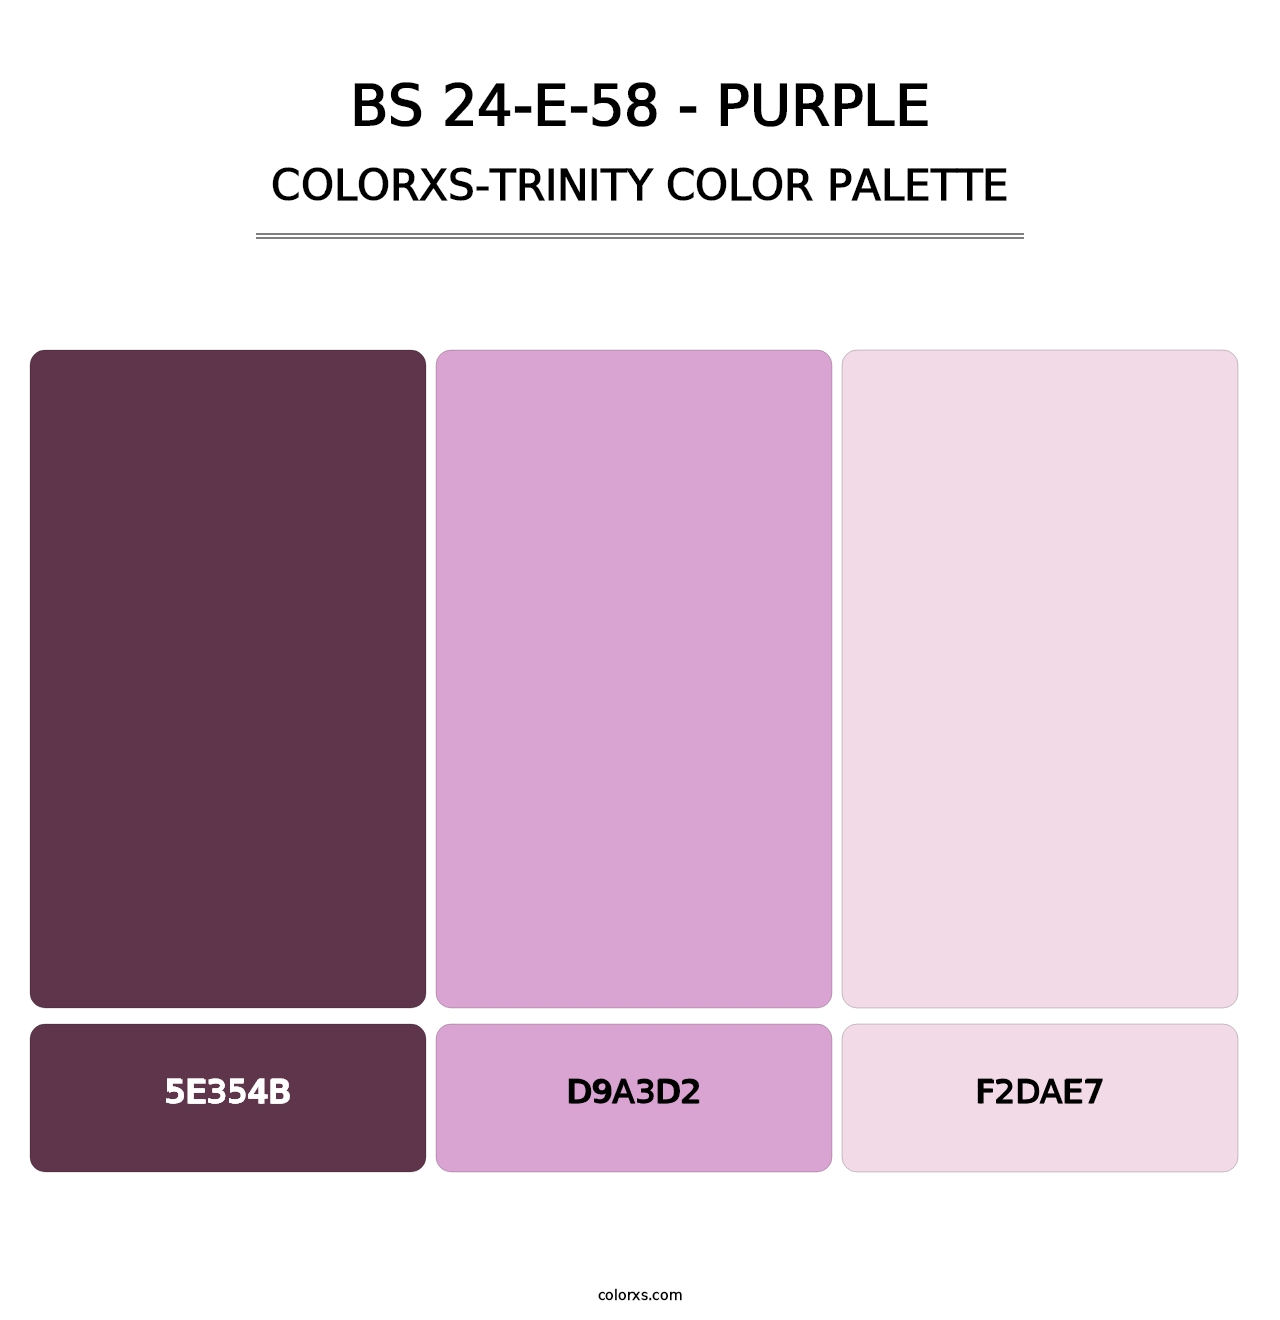 BS 24-E-58 - Purple - Colorxs Trinity Palette